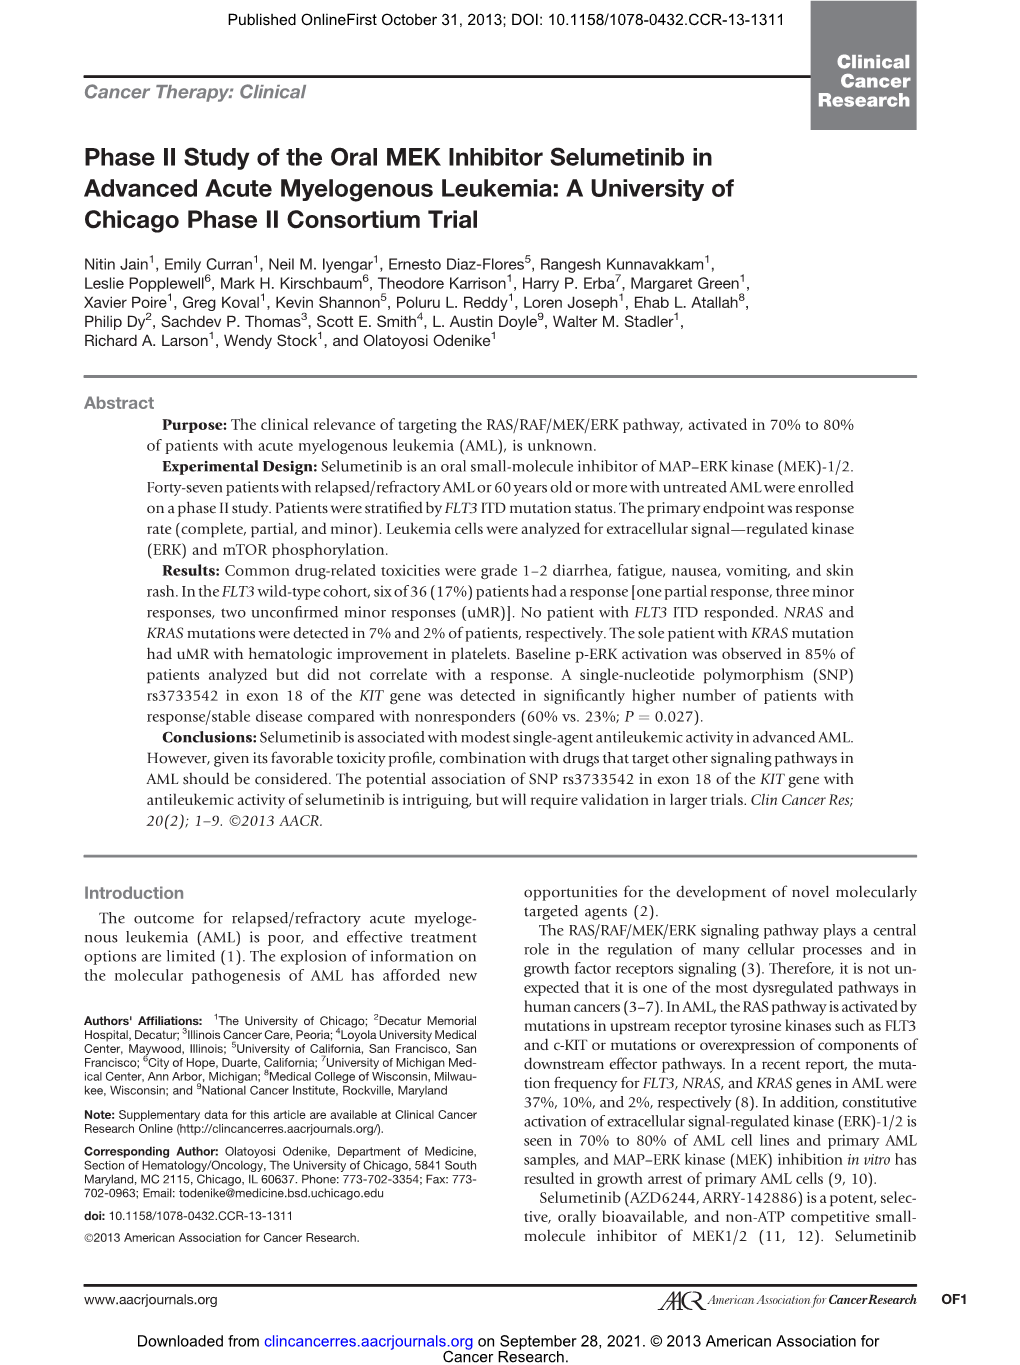 Phase II Study of the Oral MEK Inhibitor Selumetinib in Advanced Acute Myelogenous Leukemia: a University of Chicago Phase II Consortium Trial